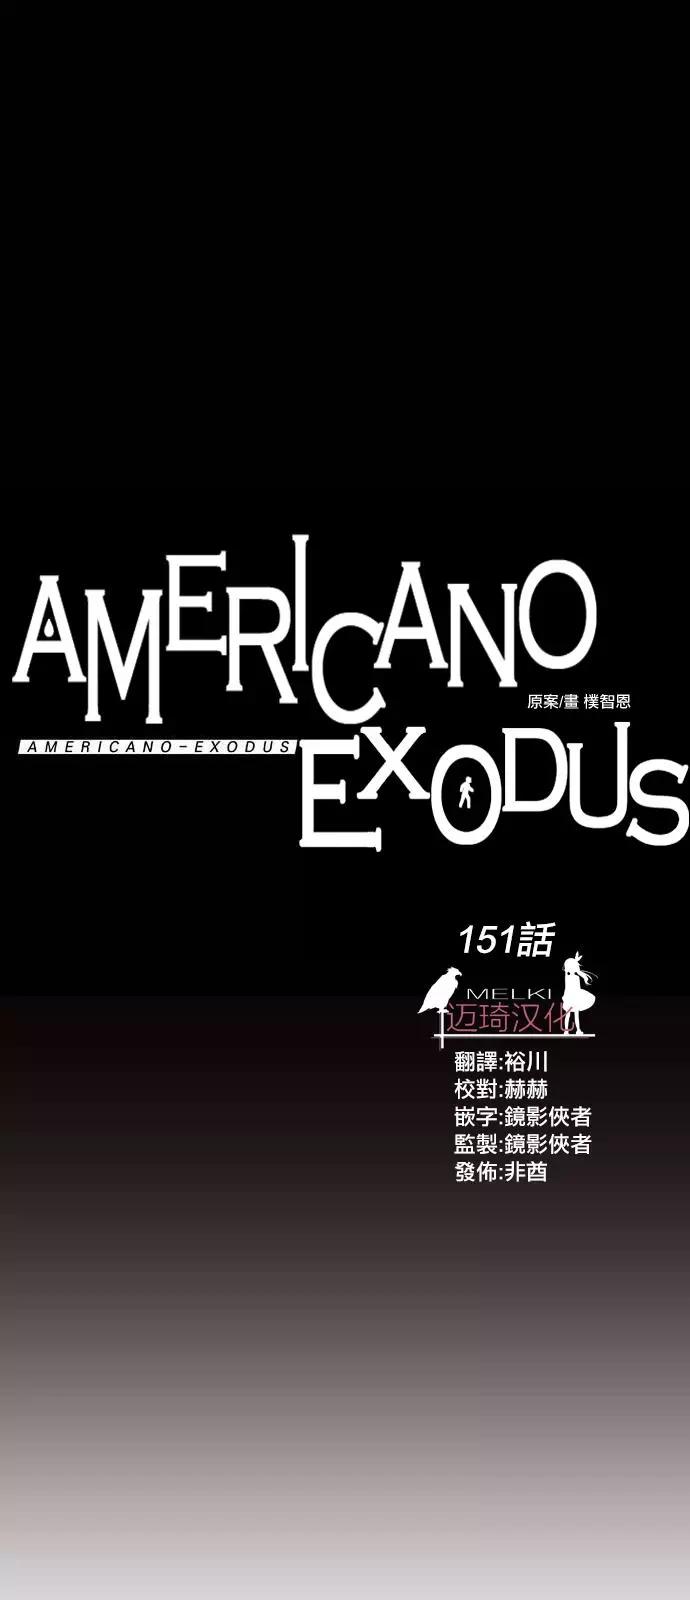 Americano-exodus - 第151回 - 6